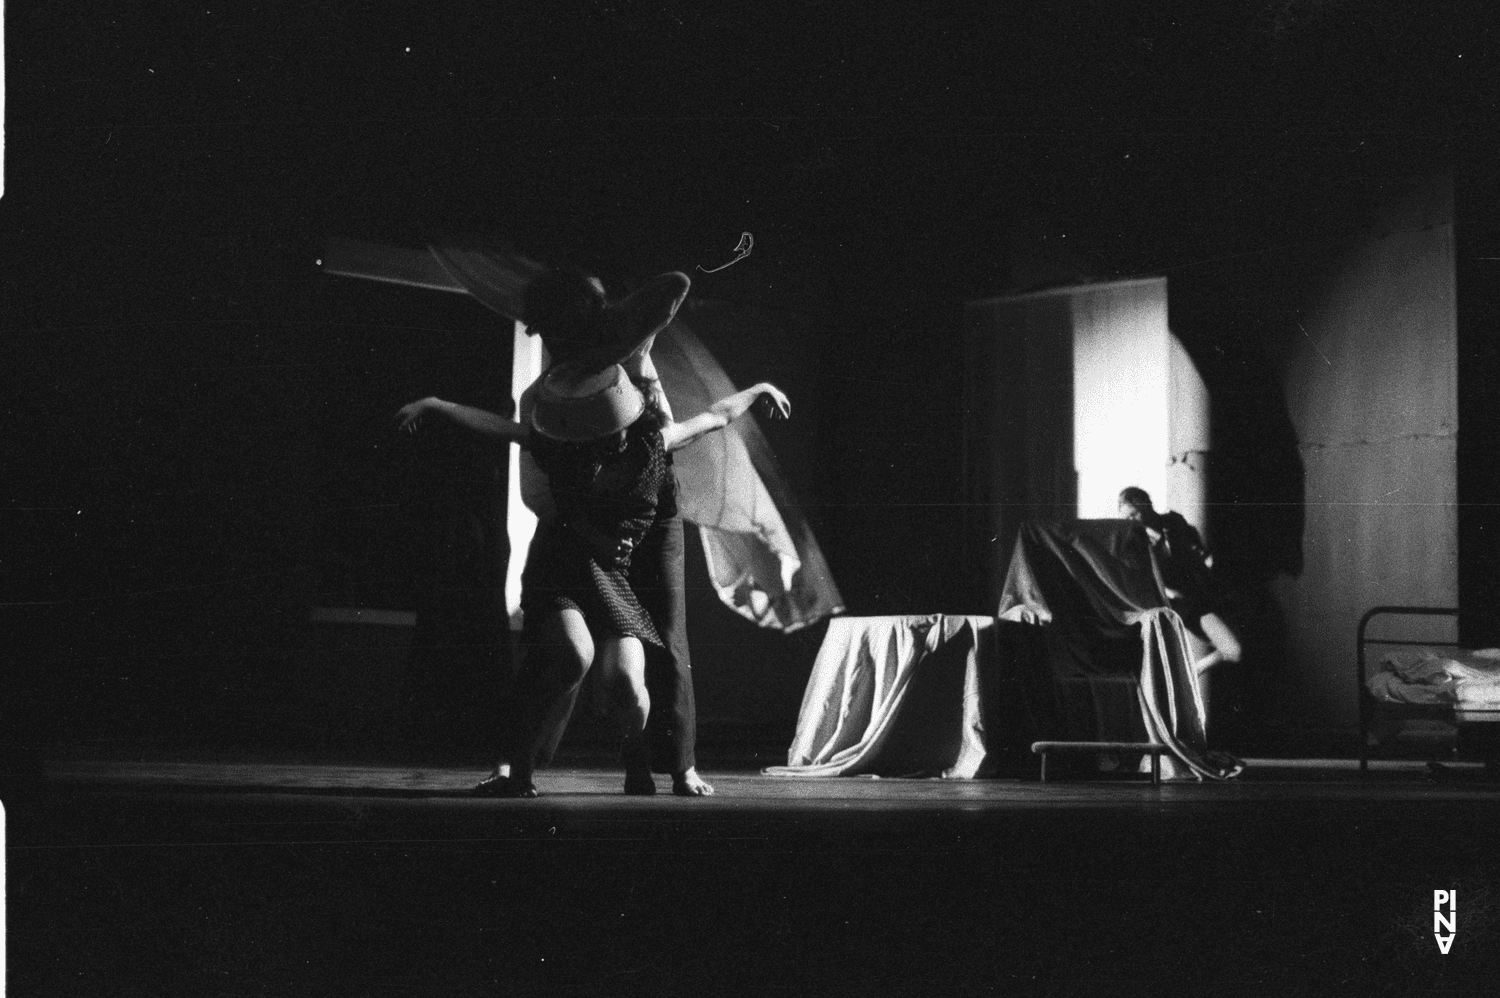 Malou Airaudo, Jan Minařík and Hiltrud Blanck in “Fritz” by Pina Bausch at Opernhaus Wuppertal